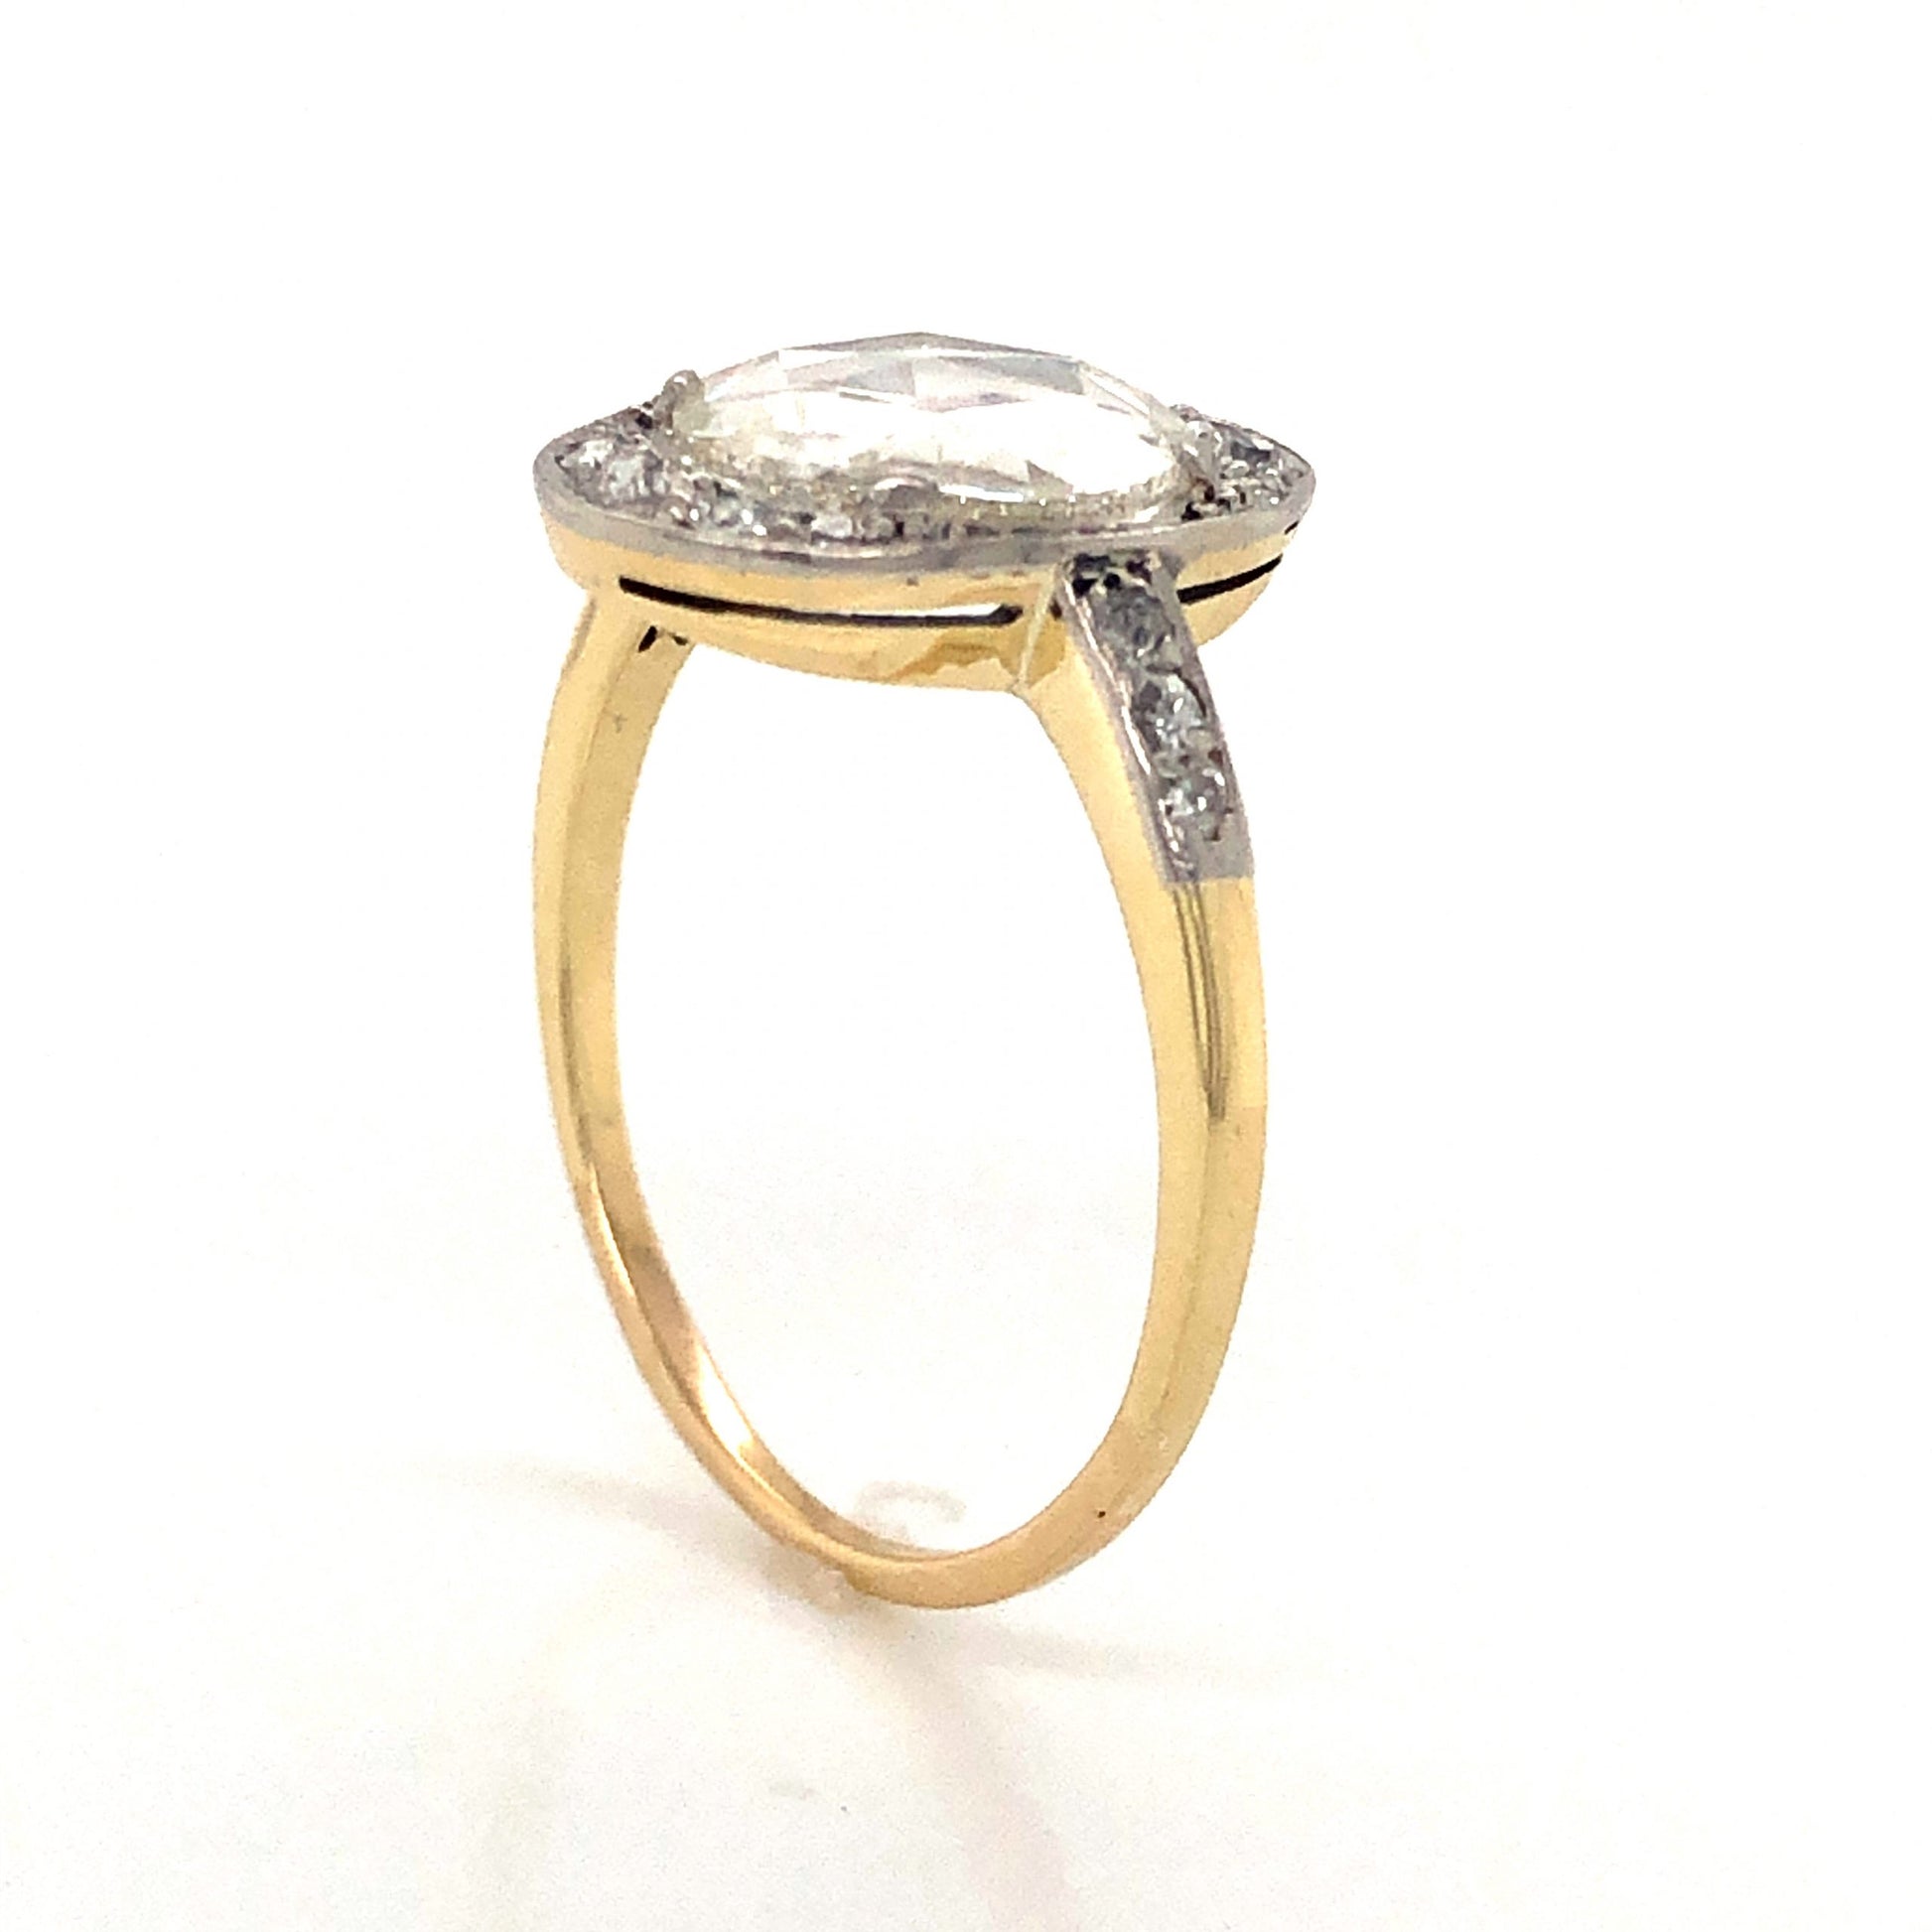 Victorian Round Rose Cut Diamond Engagement Ring in 14kComposition: 14 Karat White Gold/14 Karat Yellow Gold Ring Size: 7 Total Diamond Weight: 1.79ct Total Gram Weight: 2.4 g